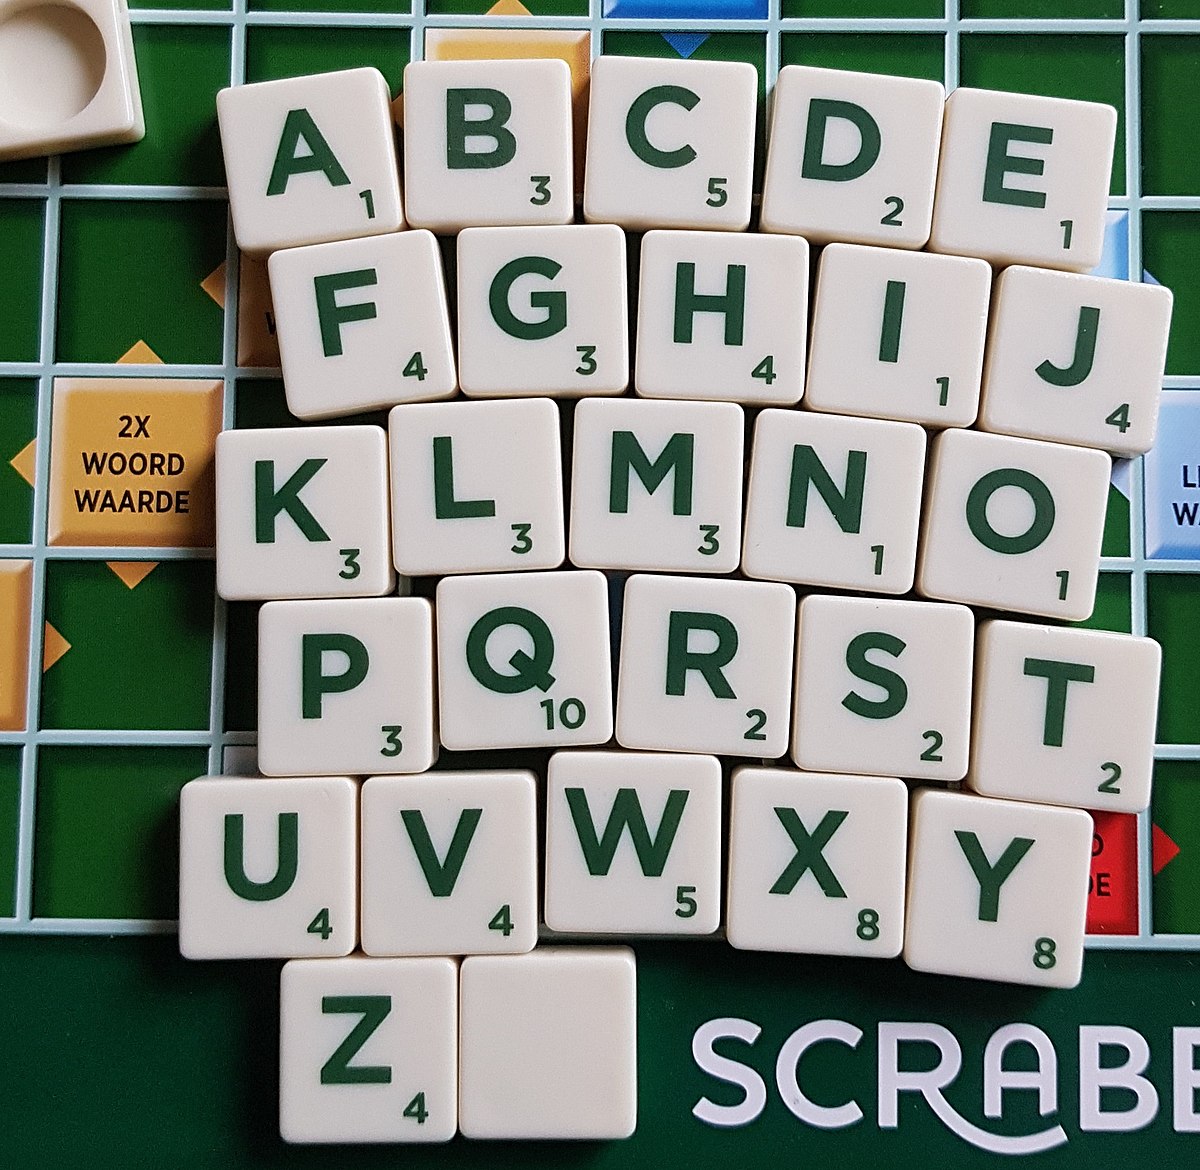 Versnel Reorganiseren vergaan Bestand:Scrabble-letters-modern-nederlands.jpg - Wikipedia